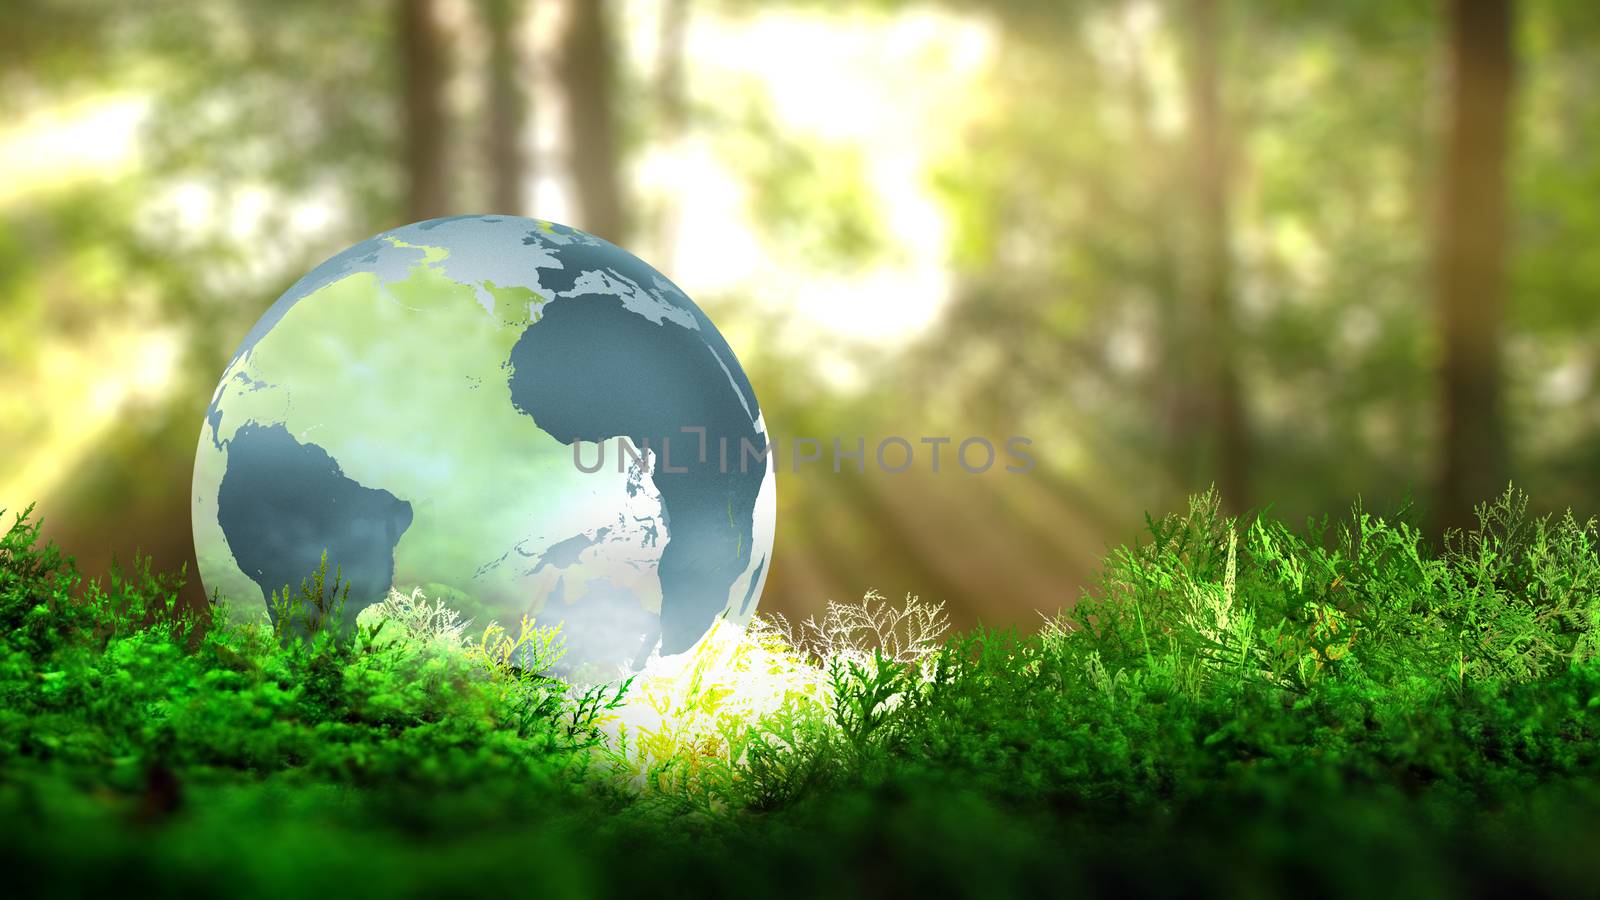 Globe on vegetation in forest. Ecological concept. 3D rendering. by ytjo